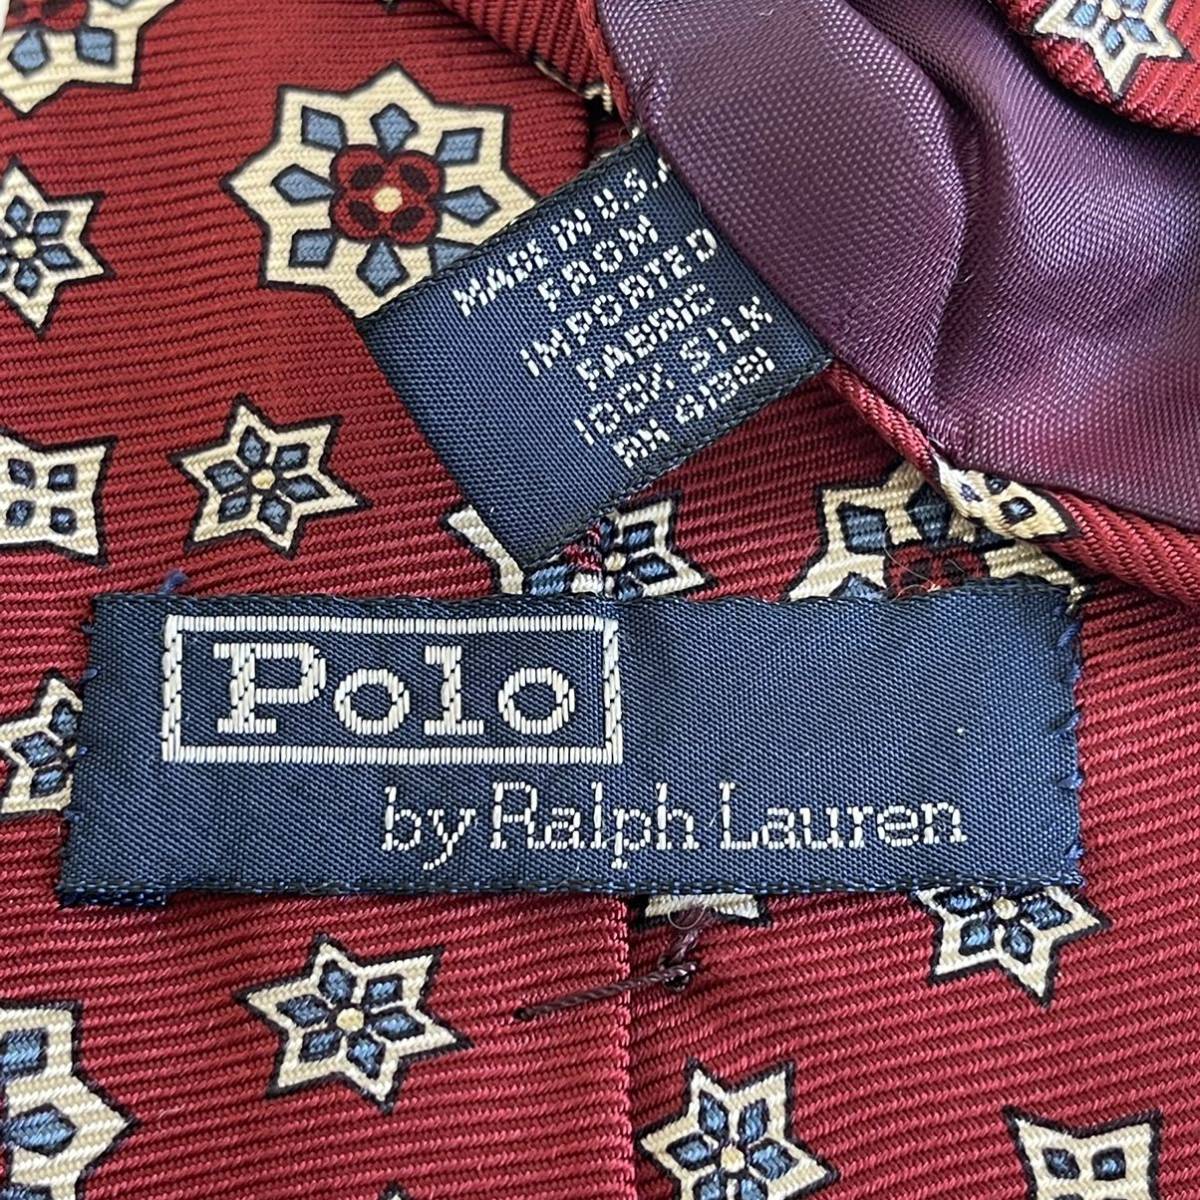 POLO by RALPH LAUREN( Polo bai Ralph Lauren ) red star pattern necktie 